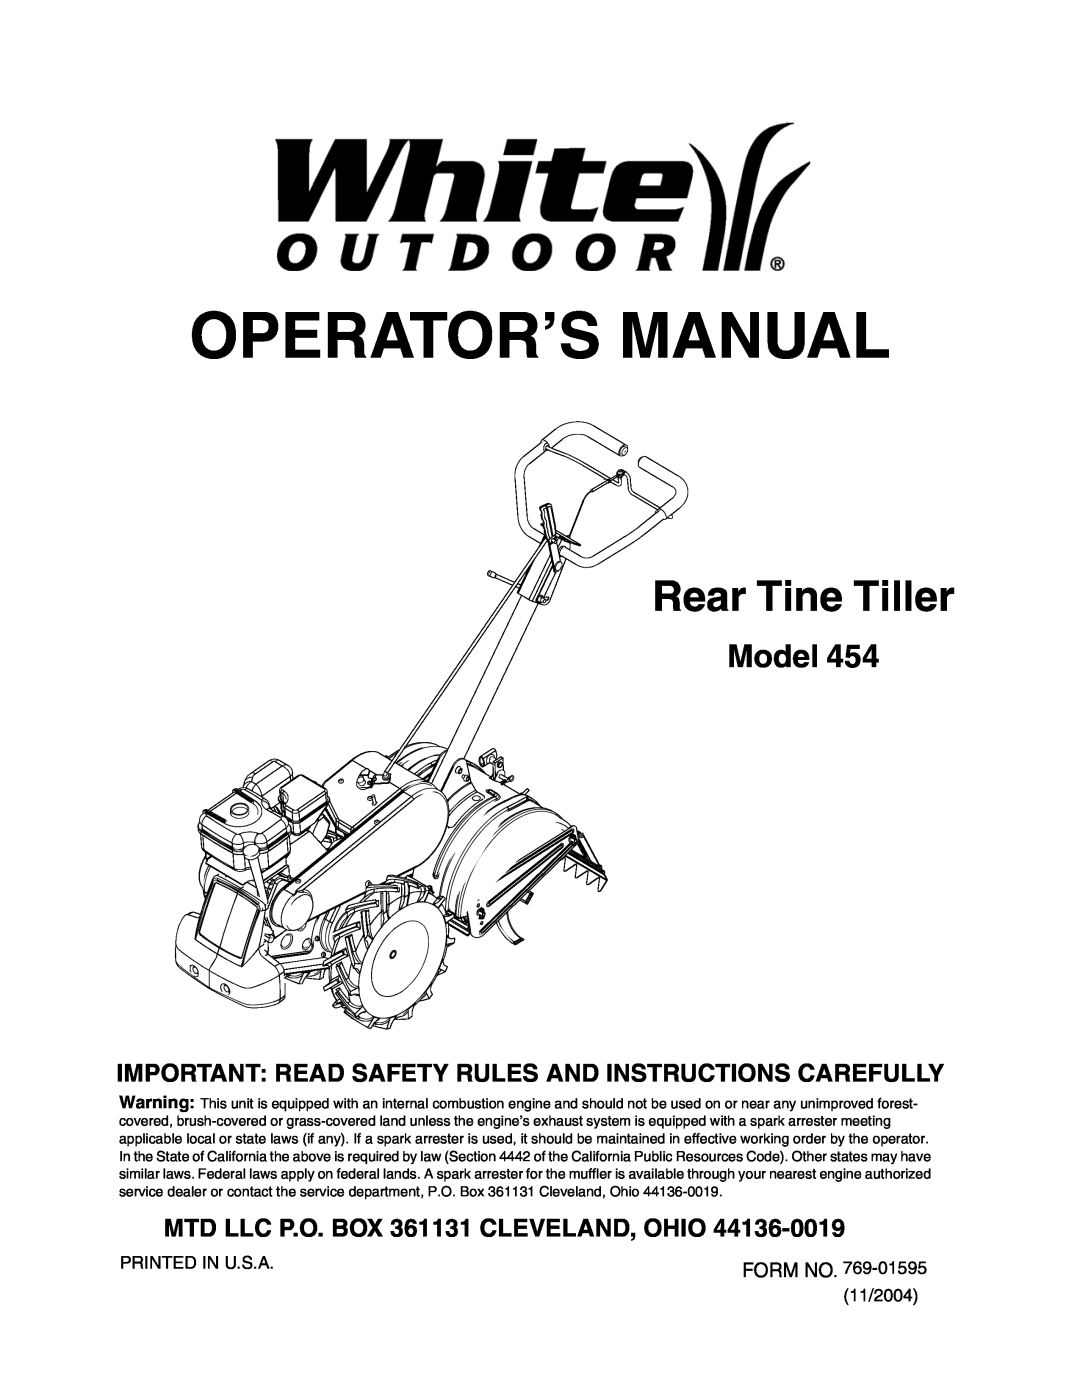 White Outdoor 454 manual Operator’S Manual, Rear Tine Tiller, Model, MTD LLC P.O. BOX 361131 CLEVELAND, OHIO 